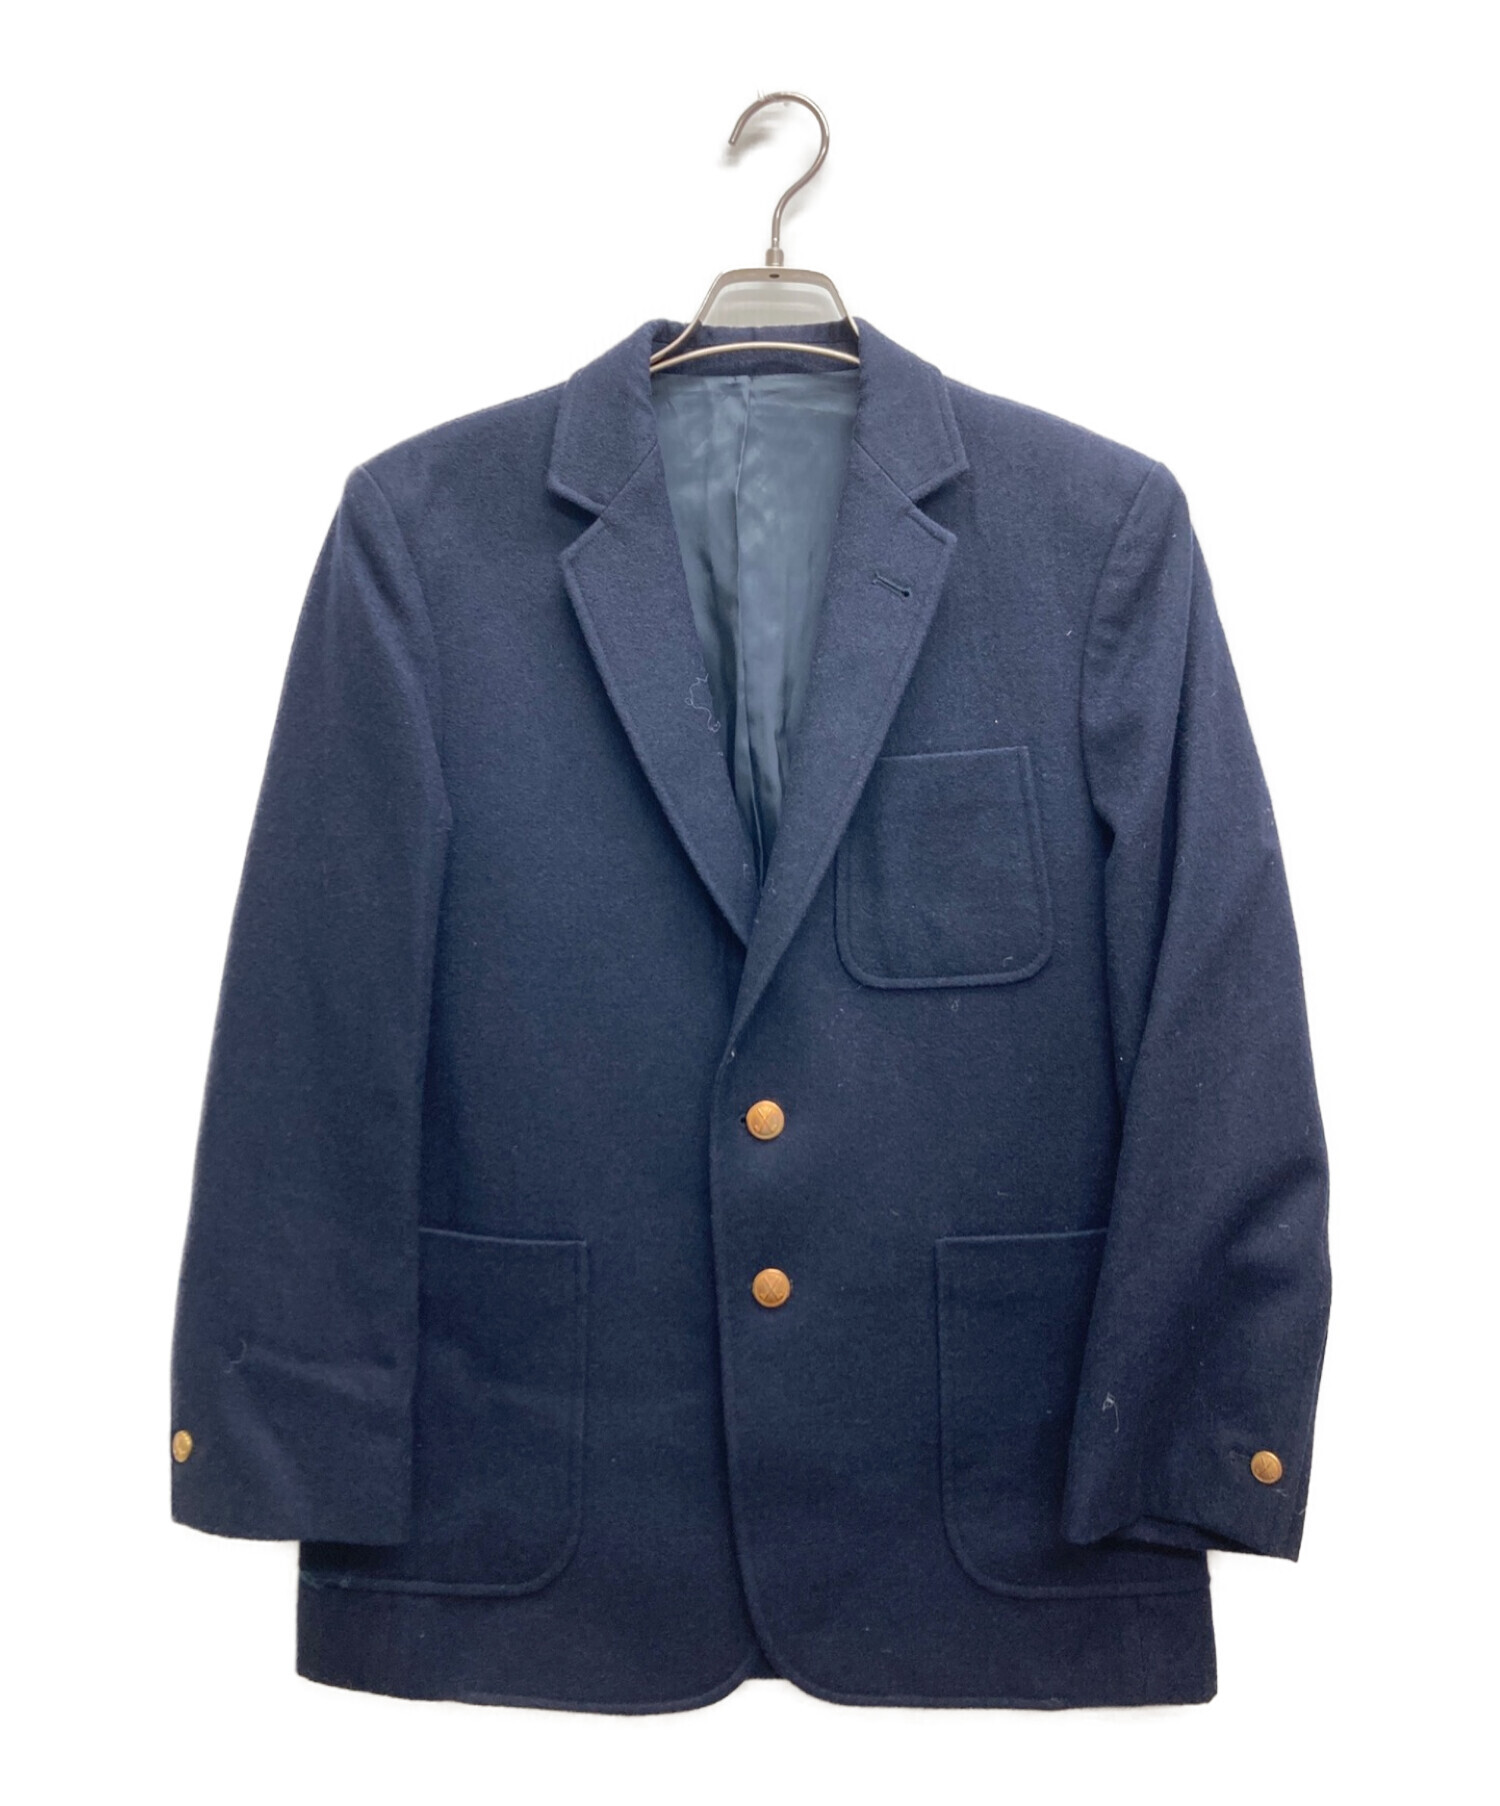 MAISON KITSUNE (メゾンキツネ) ウールテーラードジャケット ネイビー サイズ:46